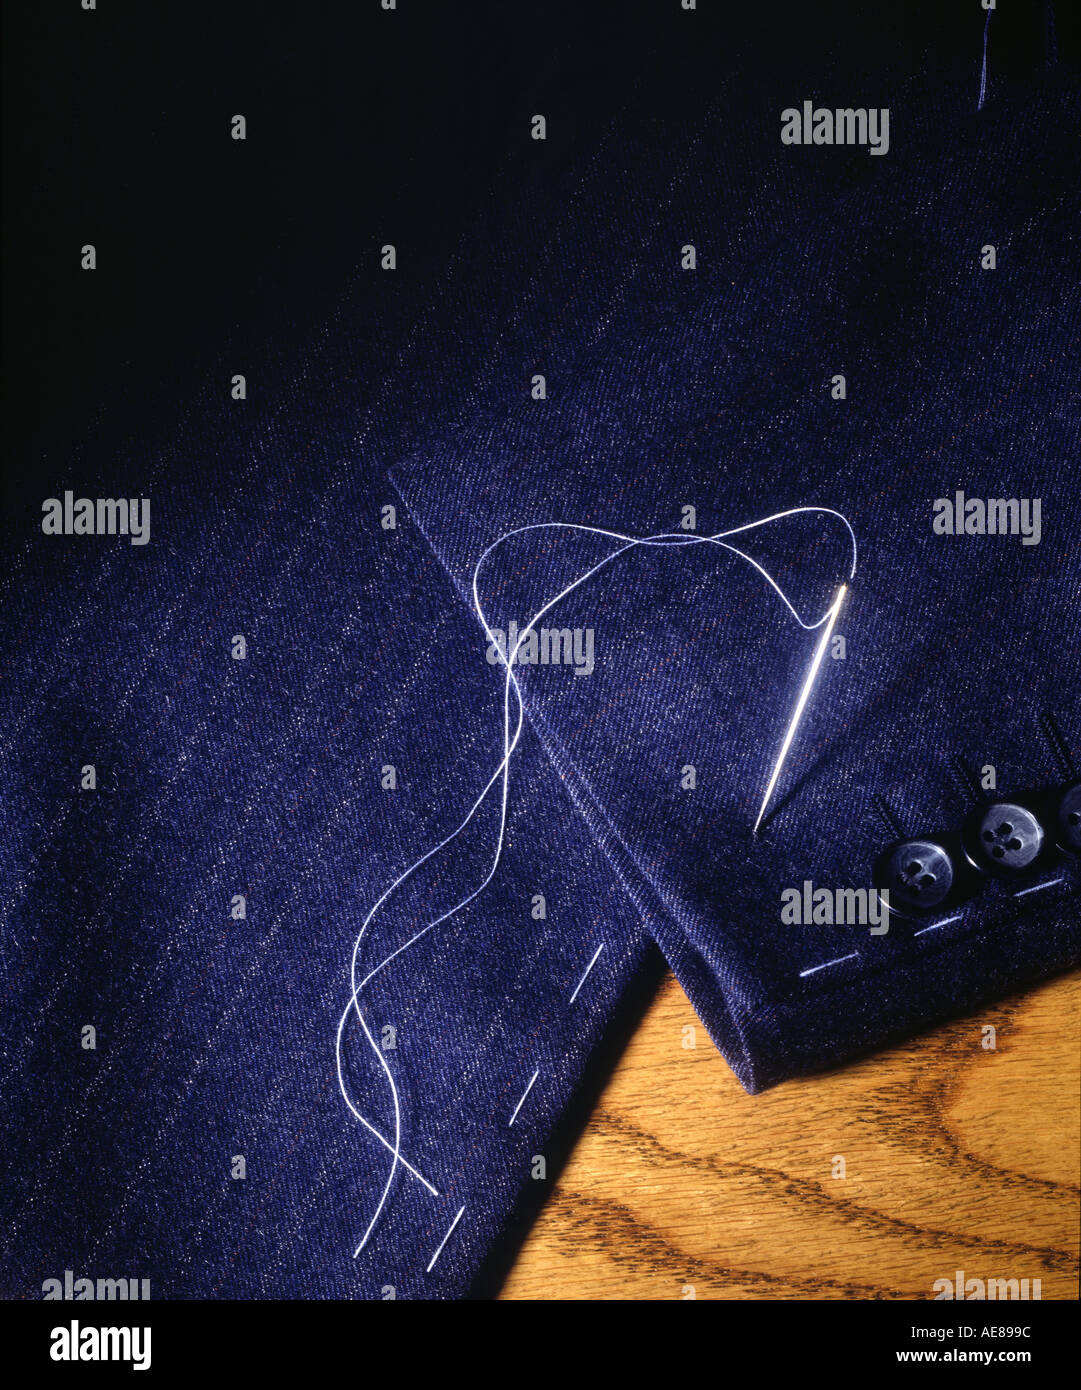 Nadel Faden nähen Reparatur Stoff Stitch ausbessern Join Material Reparaturen ändert Kleidungsstück Anzug Mantel Nähen Taylor Close-up Stockfoto